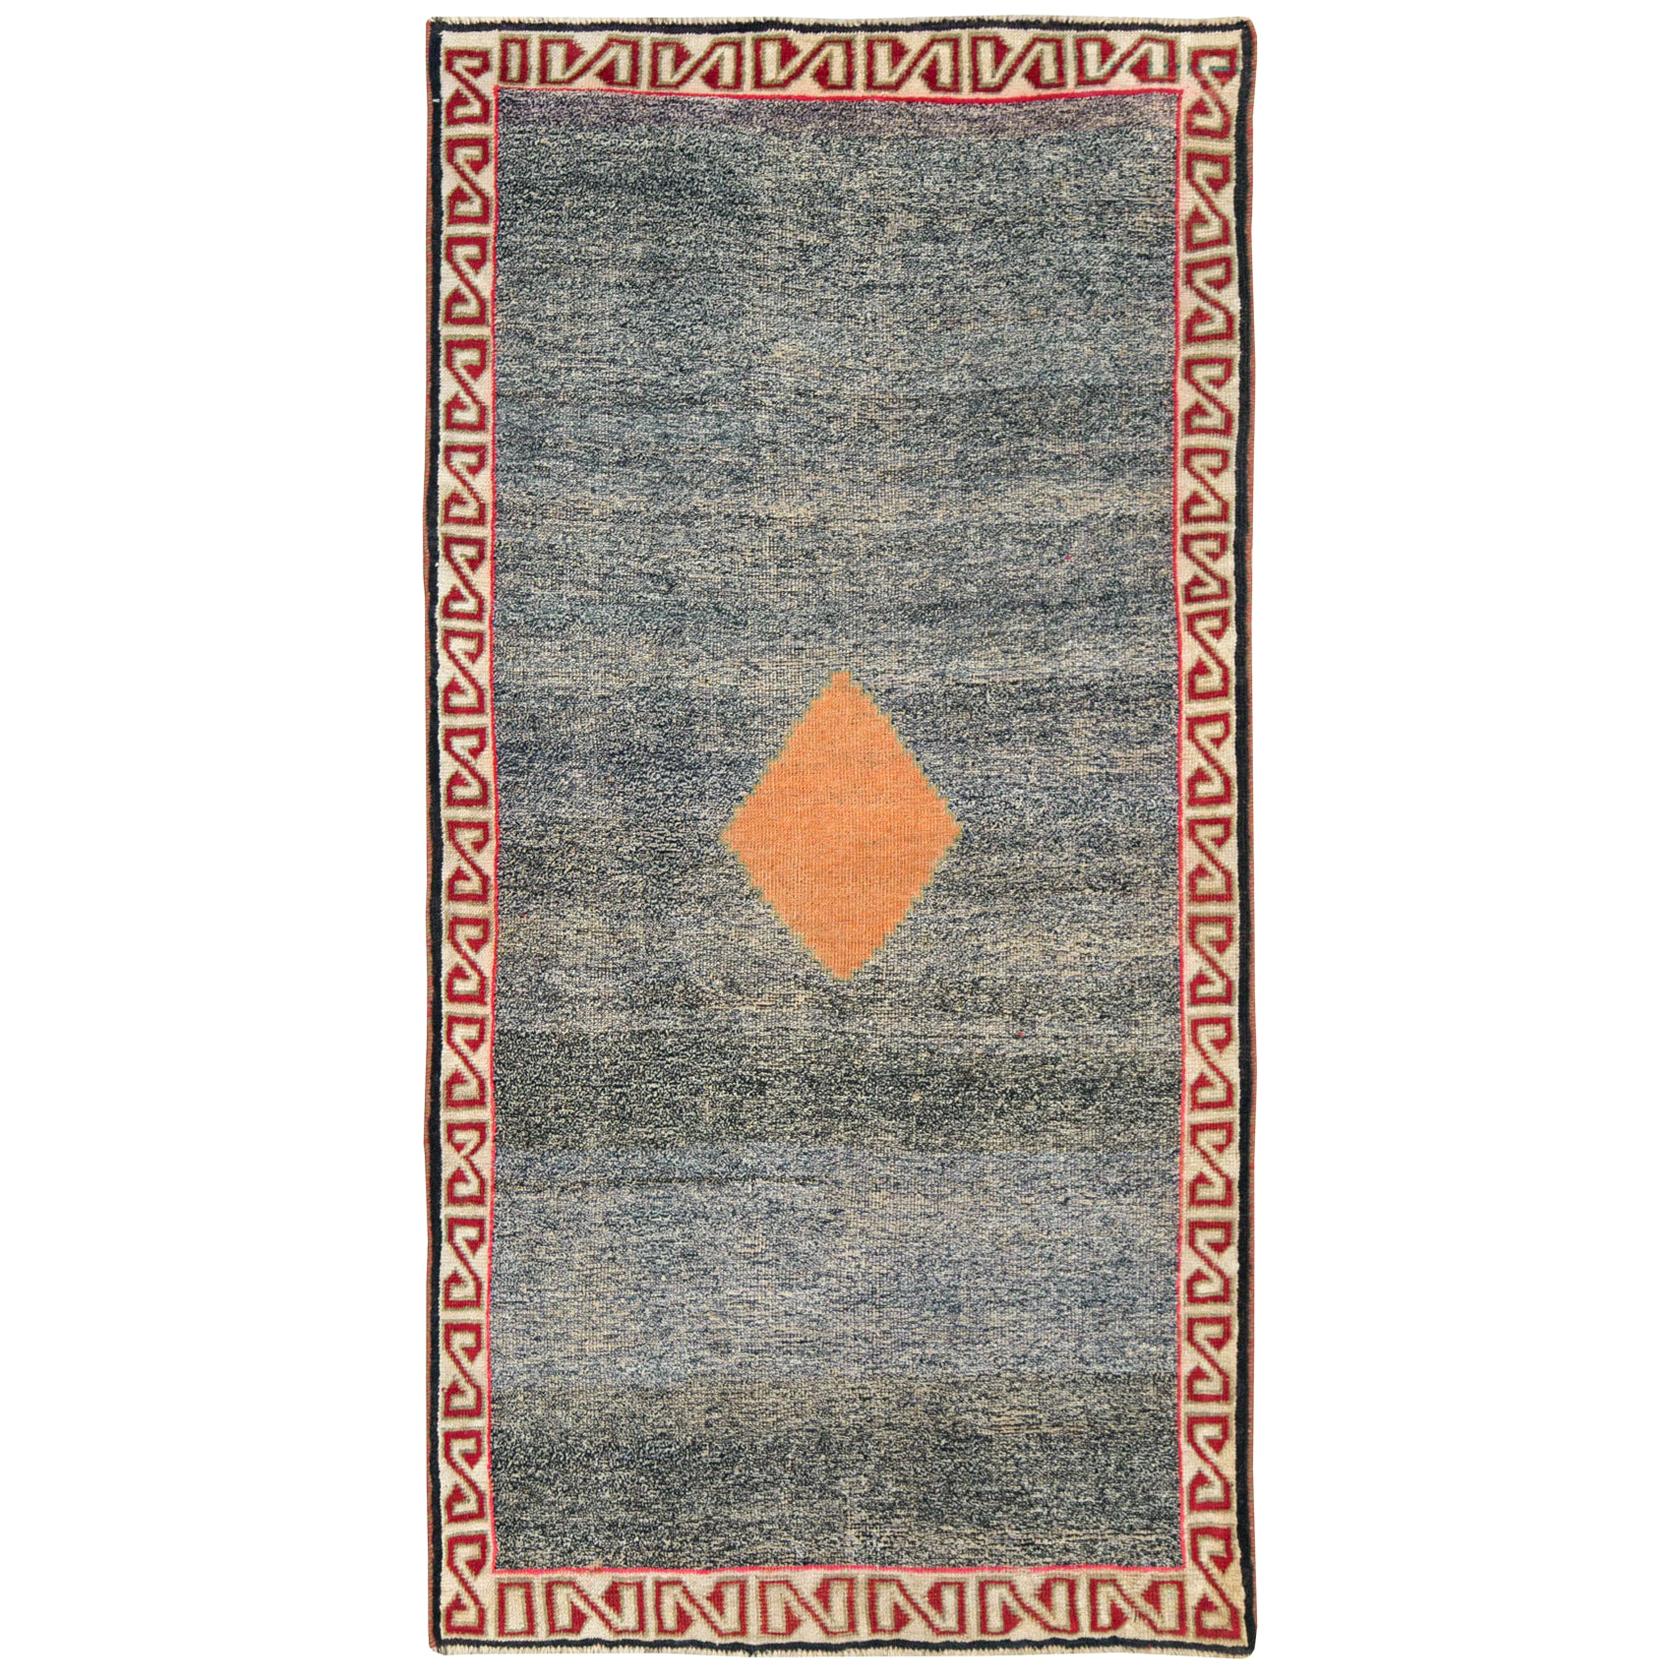 Tribal Mid-20th Century Handmade Persian Gabbeh Accent Rug